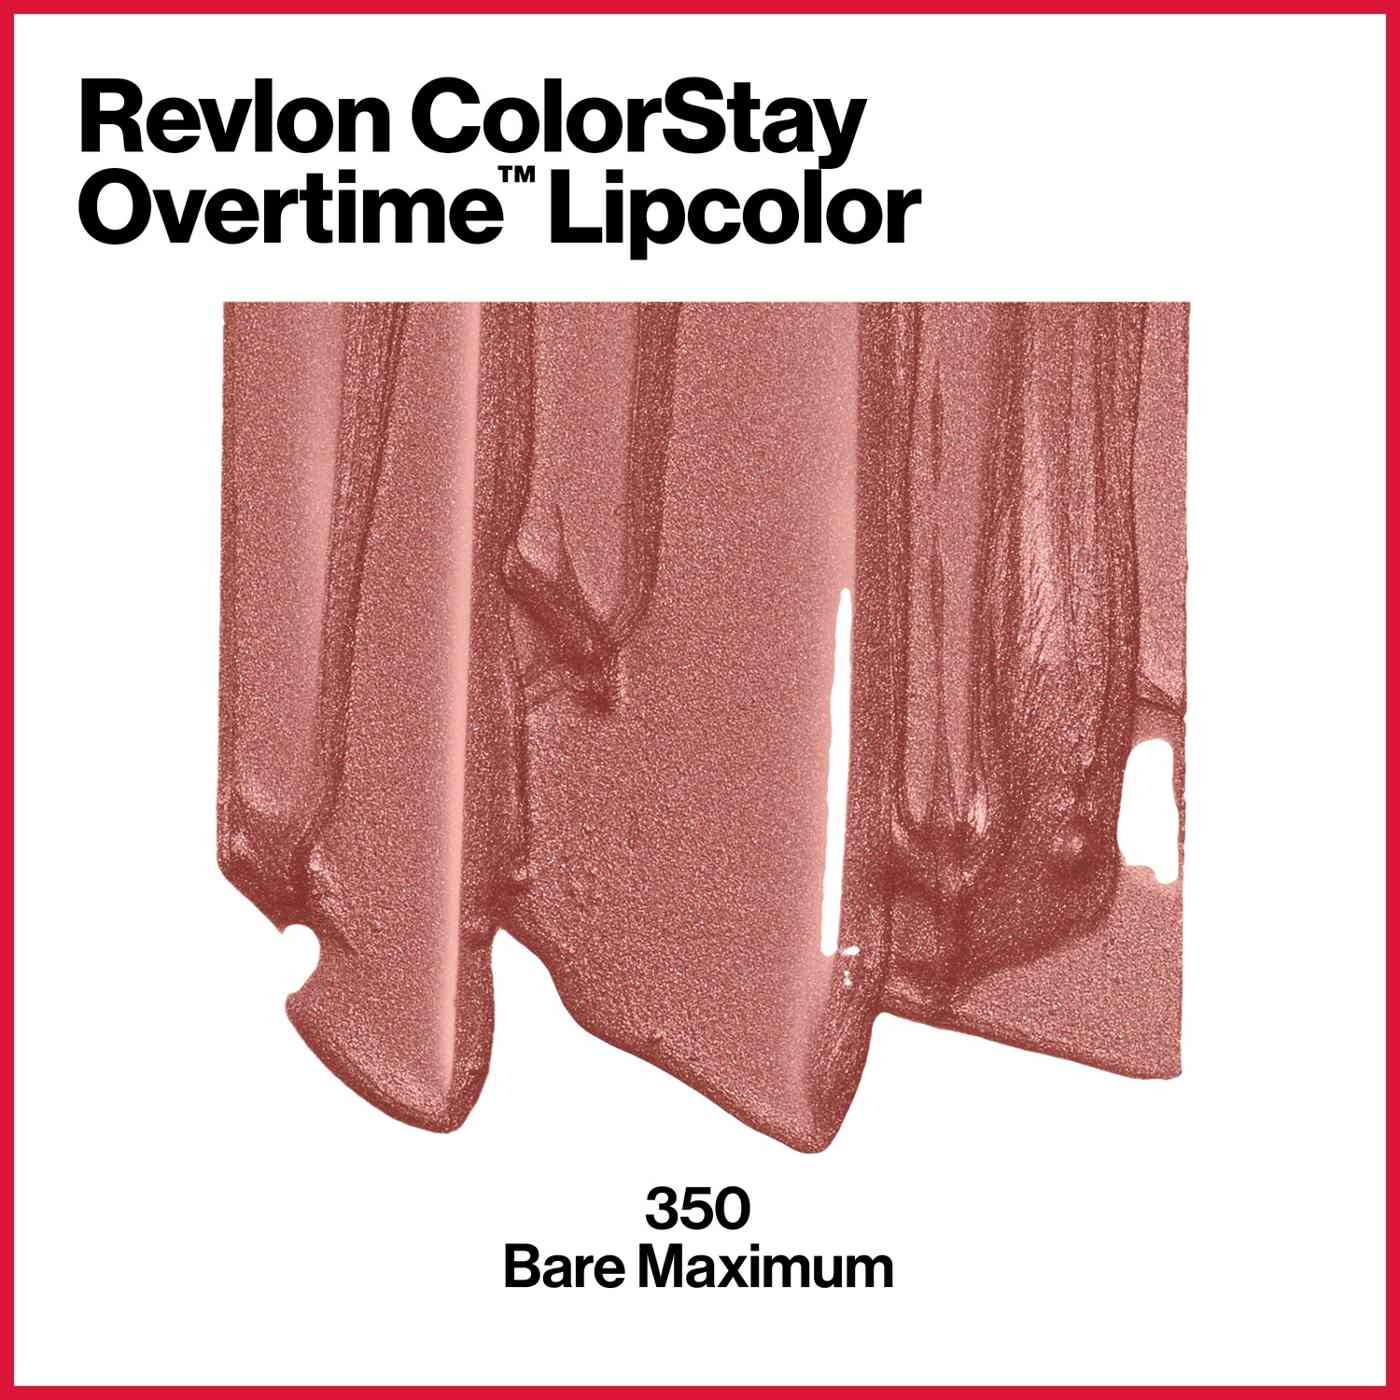 Revlon ColorStay Overtime Lipcolor, Long Wearing Liquid Lipstick, 350 Bare Maximum; image 7 of 7